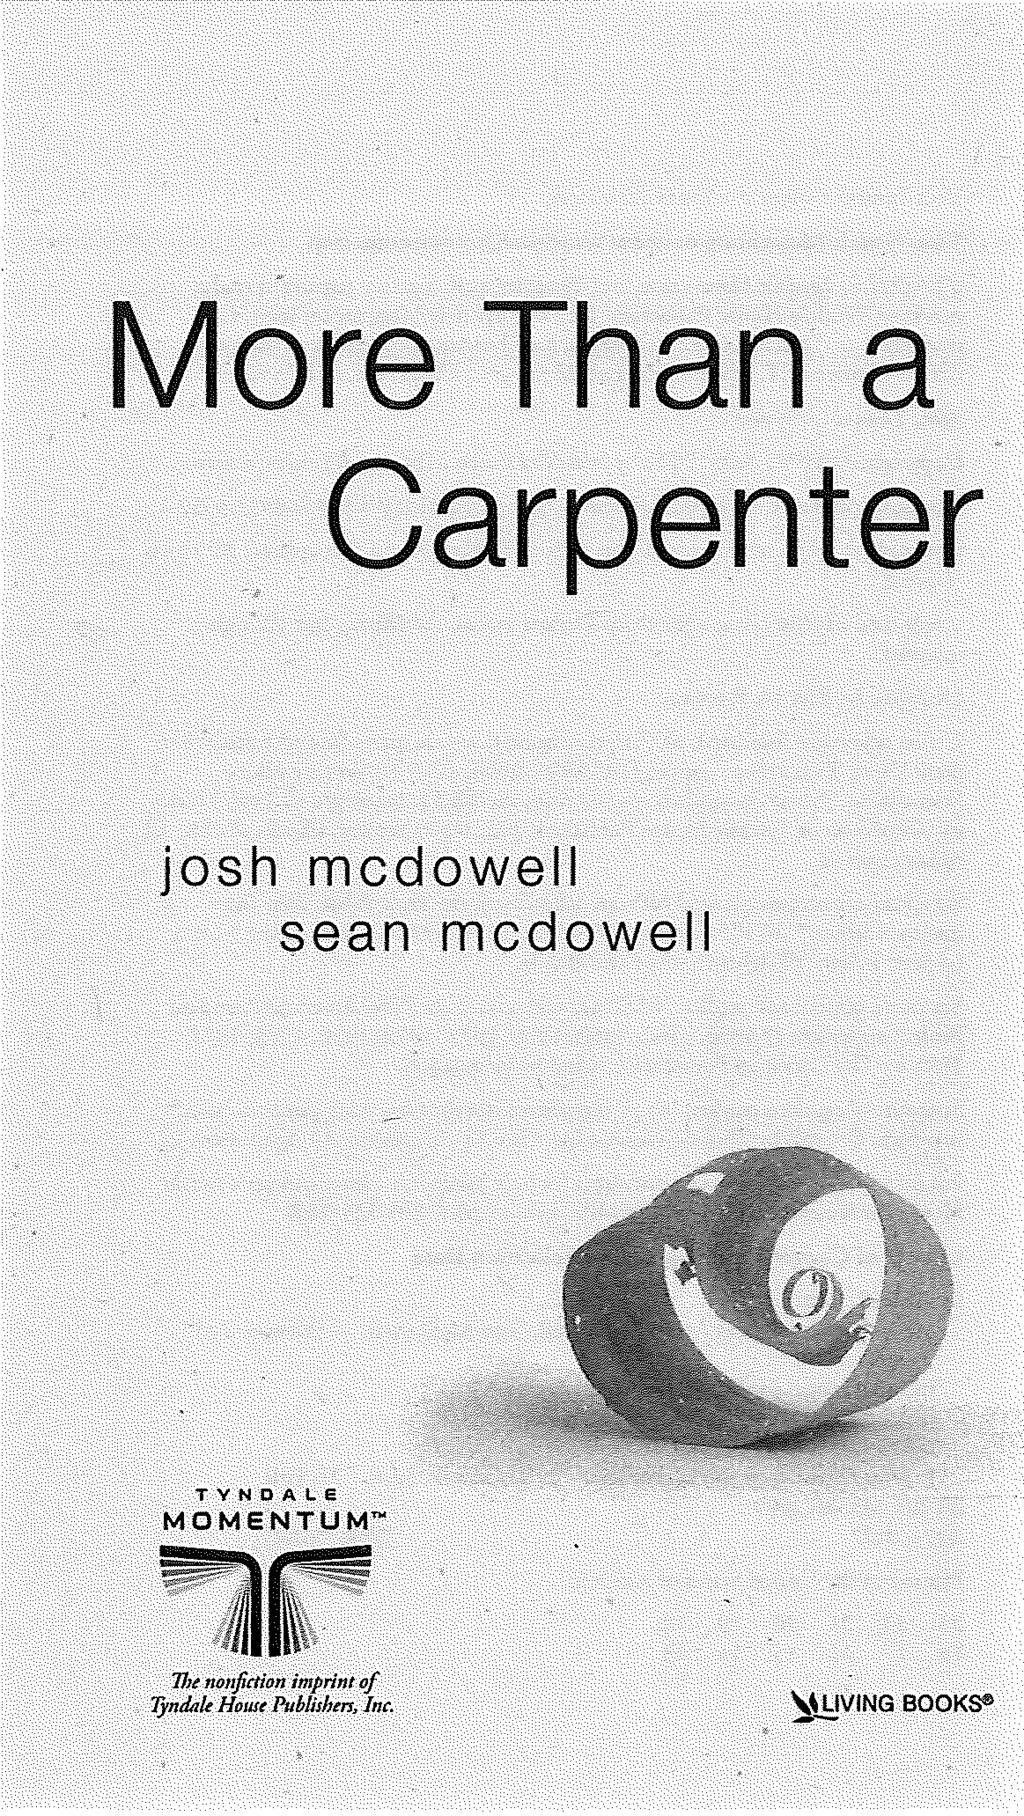 More Than a Carpenter josh mcdowell sean mcdowell TYNDALE MOMENTUM~